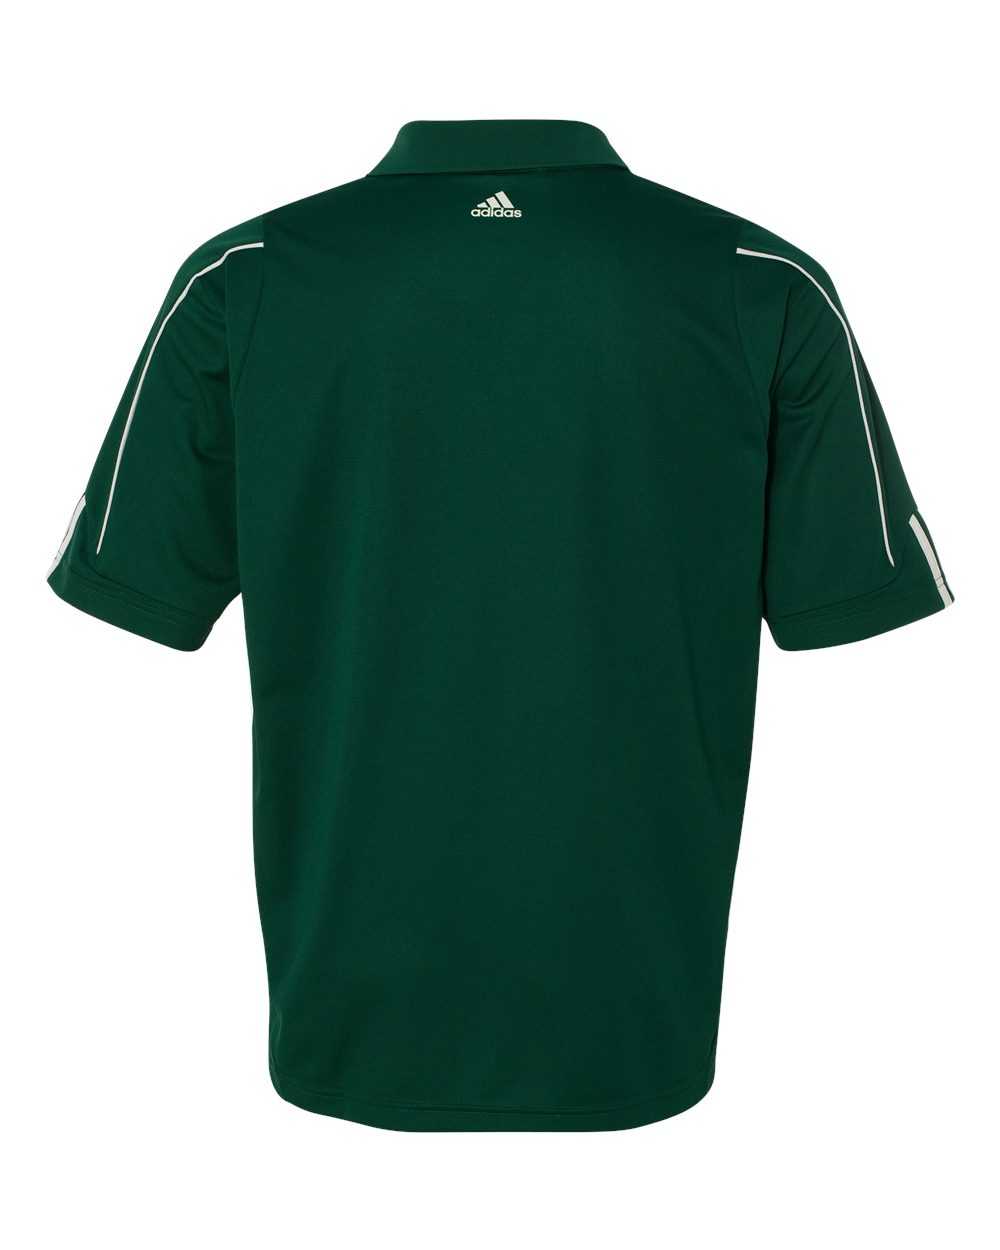 Adidas A76 3-Stripes Cuff Sport Shirt - Collegiate Green White - HIT a Double